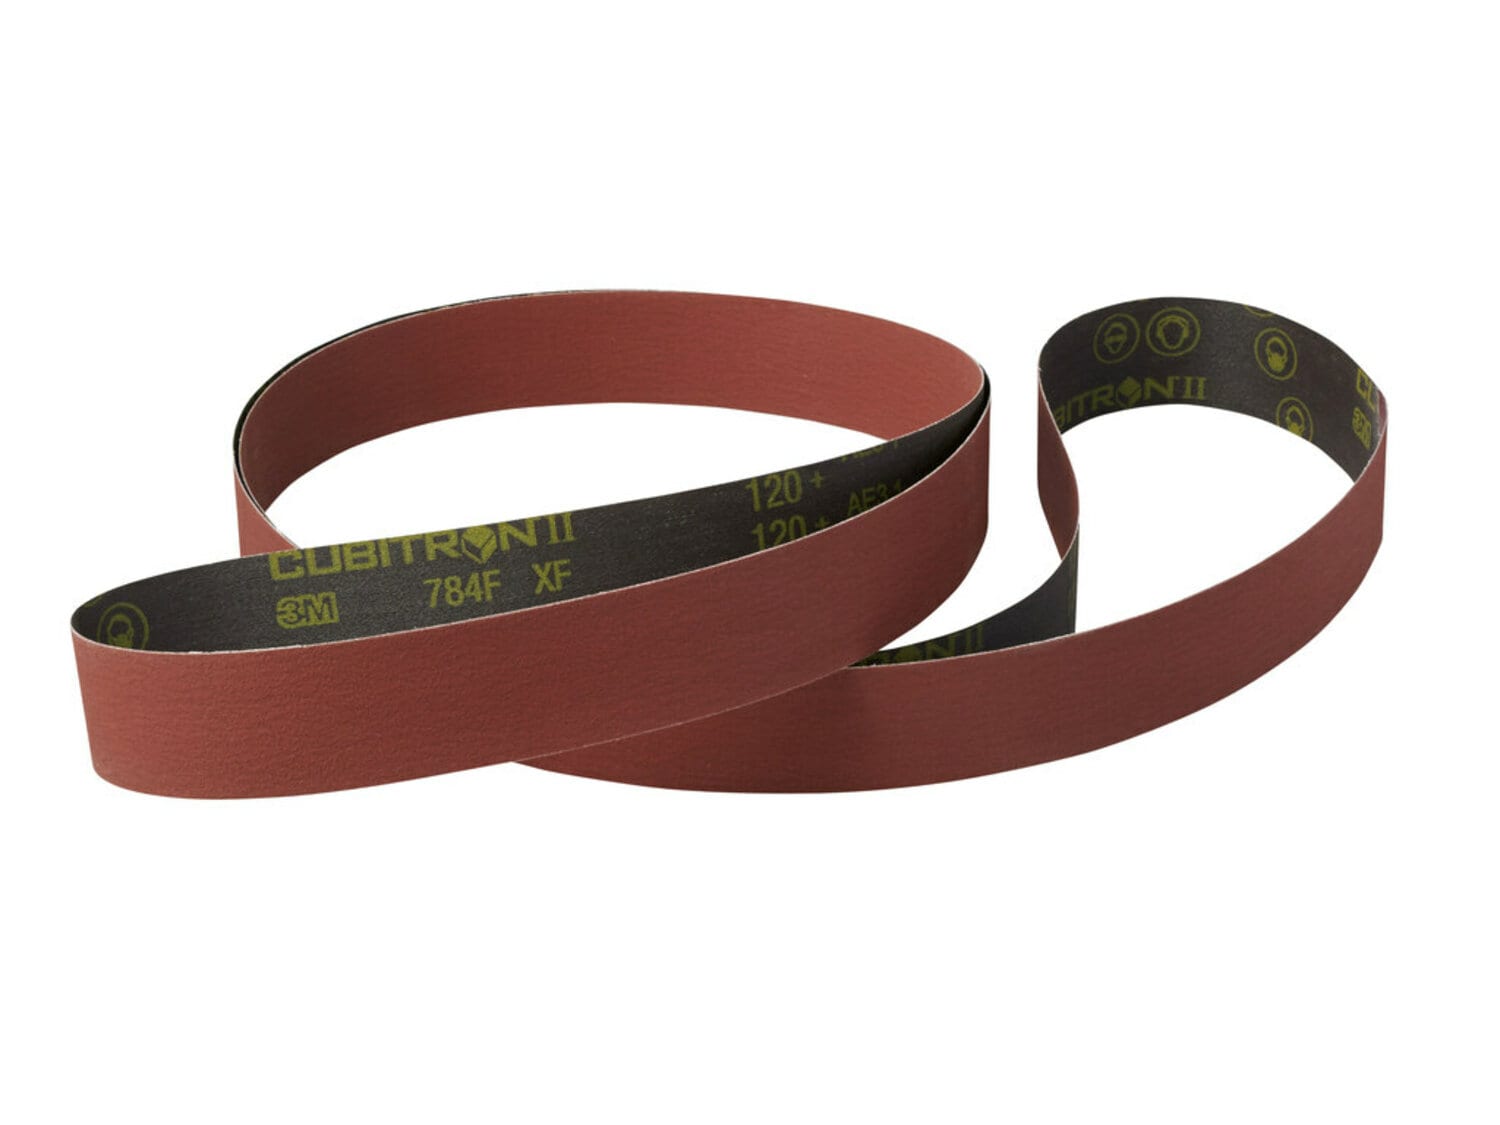 7010515810 - 3M Cubitron II Cloth Belt 984F, 80+ YF-weight, 2-1/2 in x 118 in,
Film-lok, Single-flex